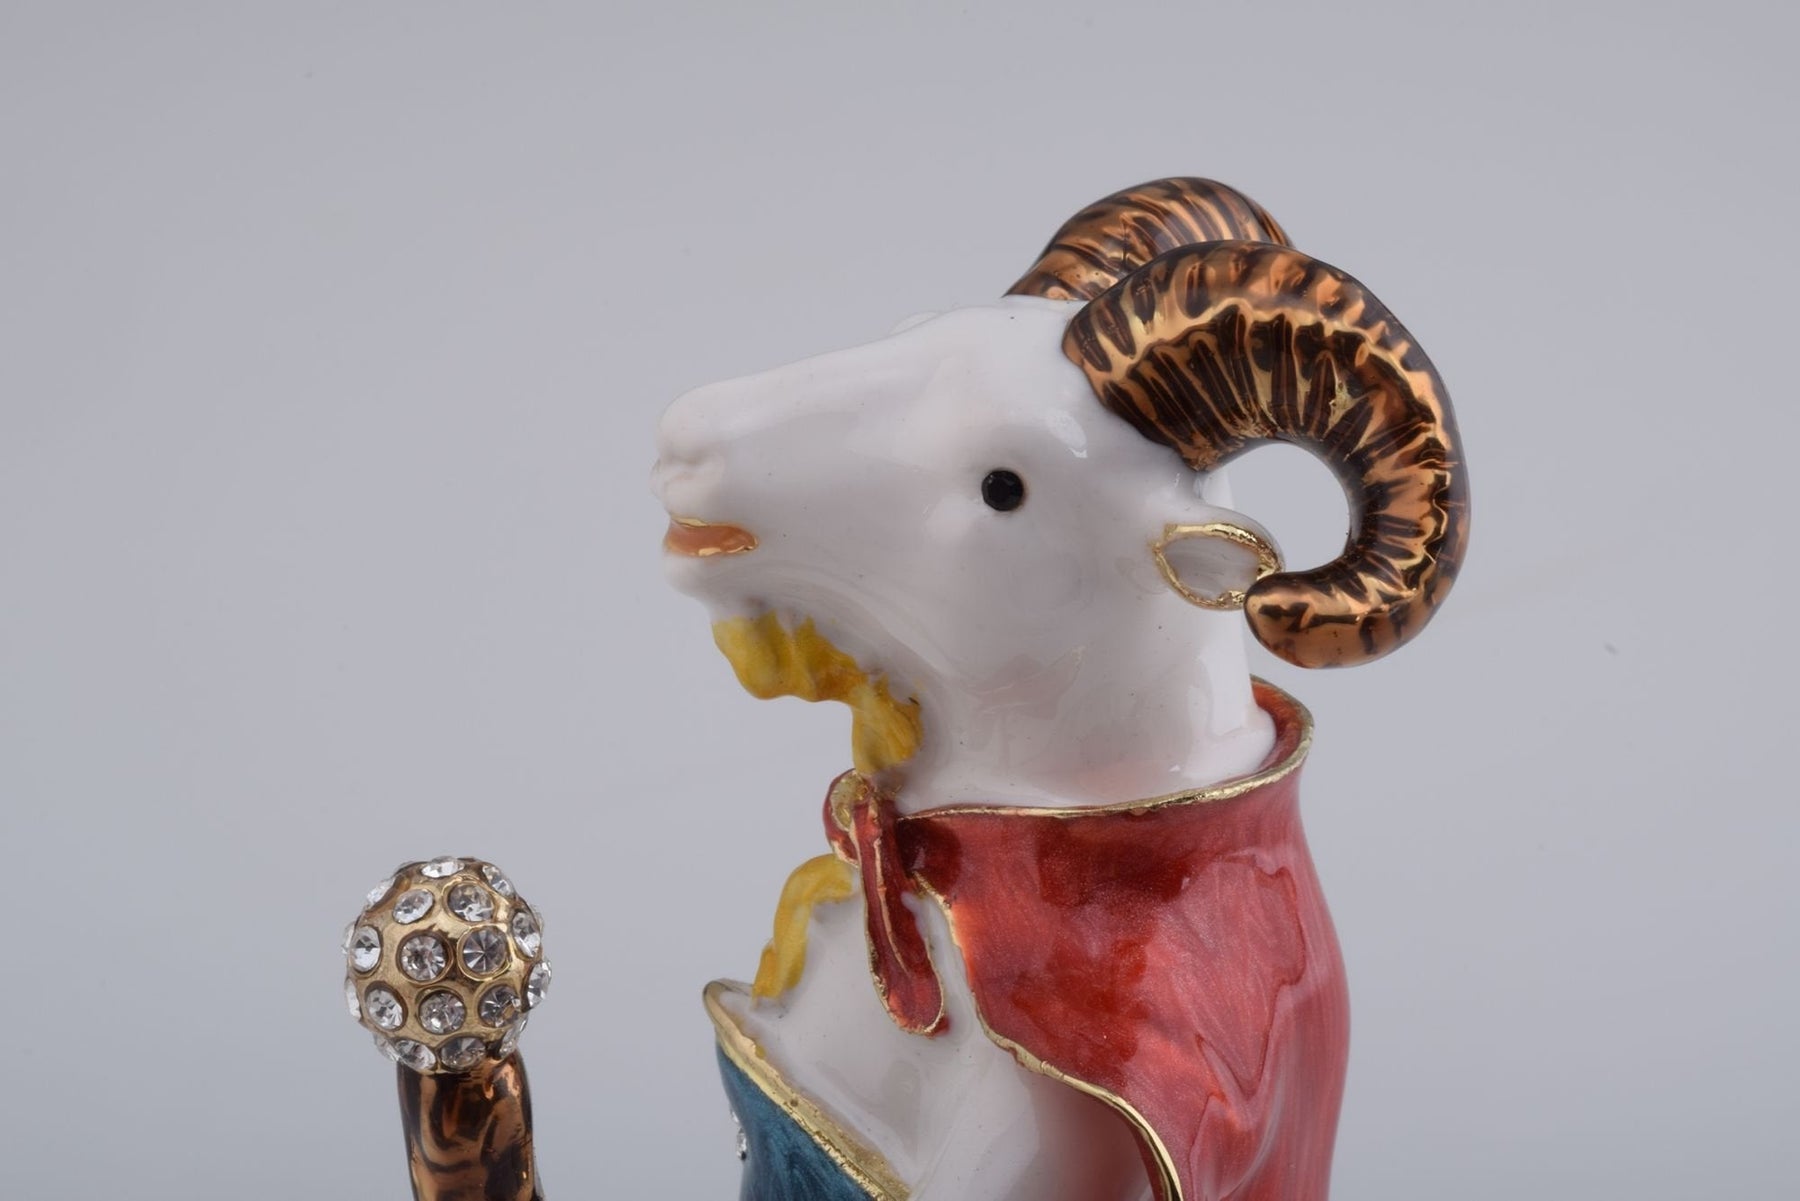 Keren Kopal King of Goats trinket box 87.75